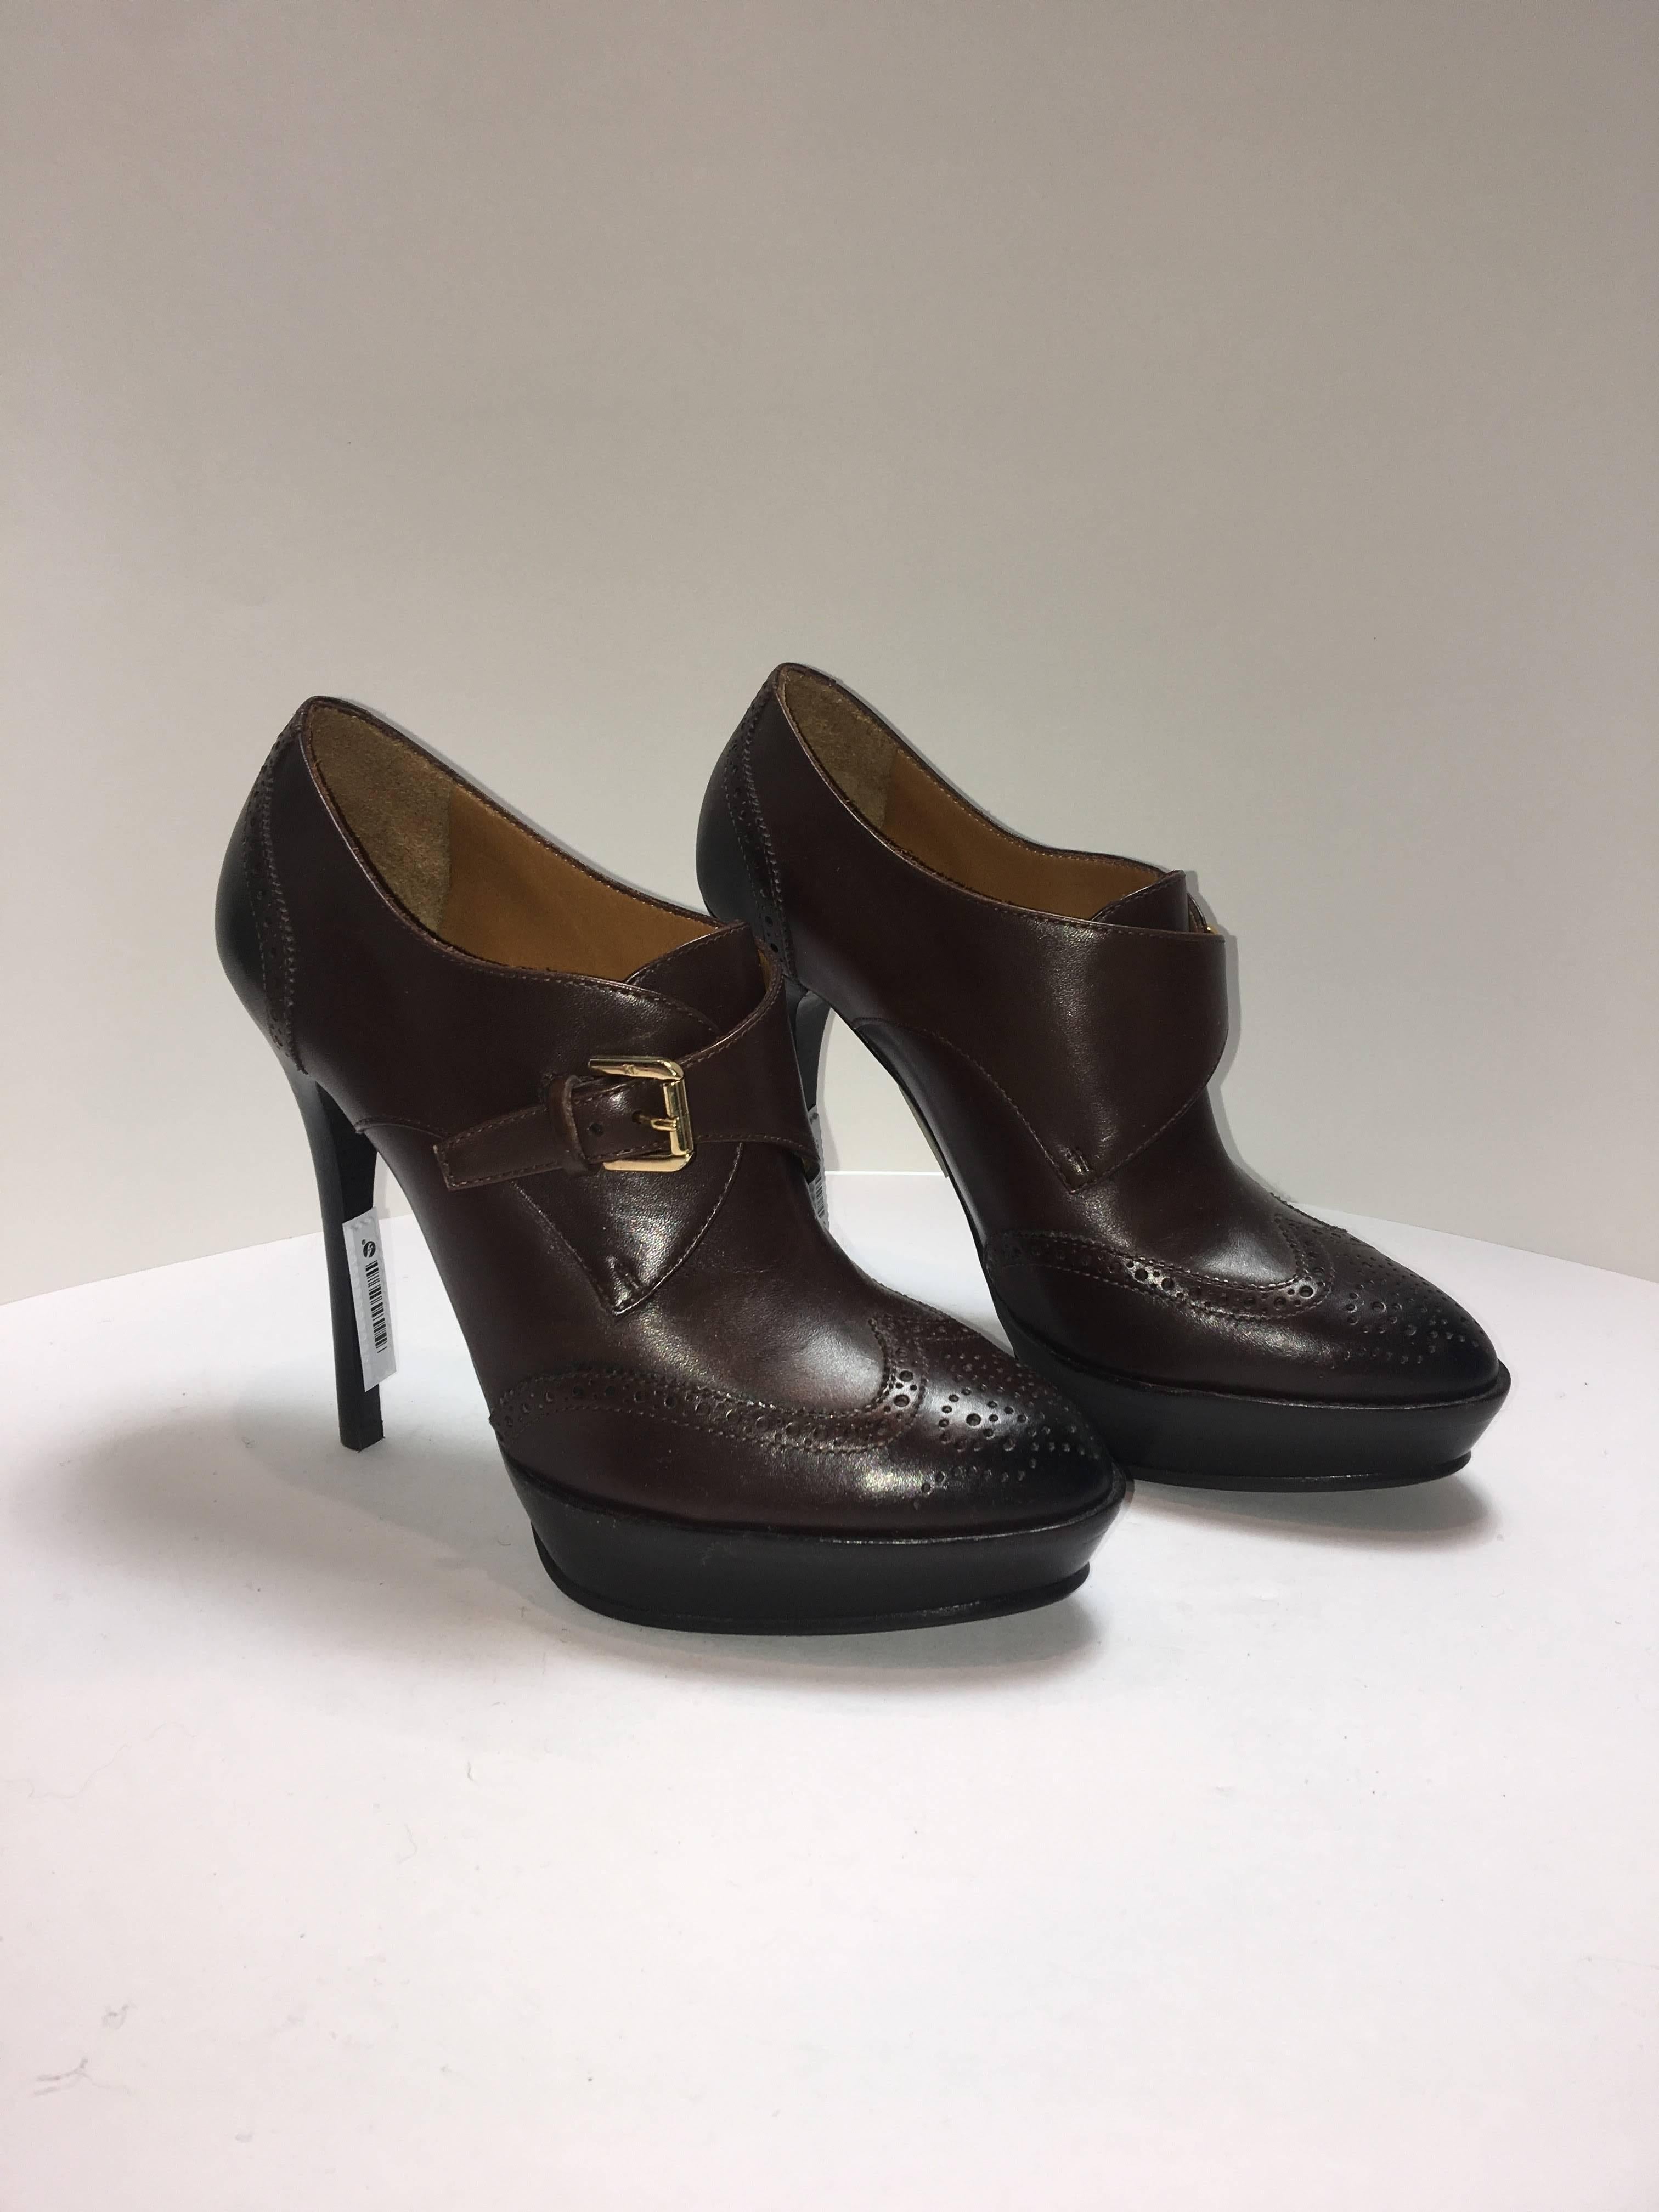 Ralph Lauren Purple Label in Brown Leather. Oxford style Platform heel with Gold Buckle. 